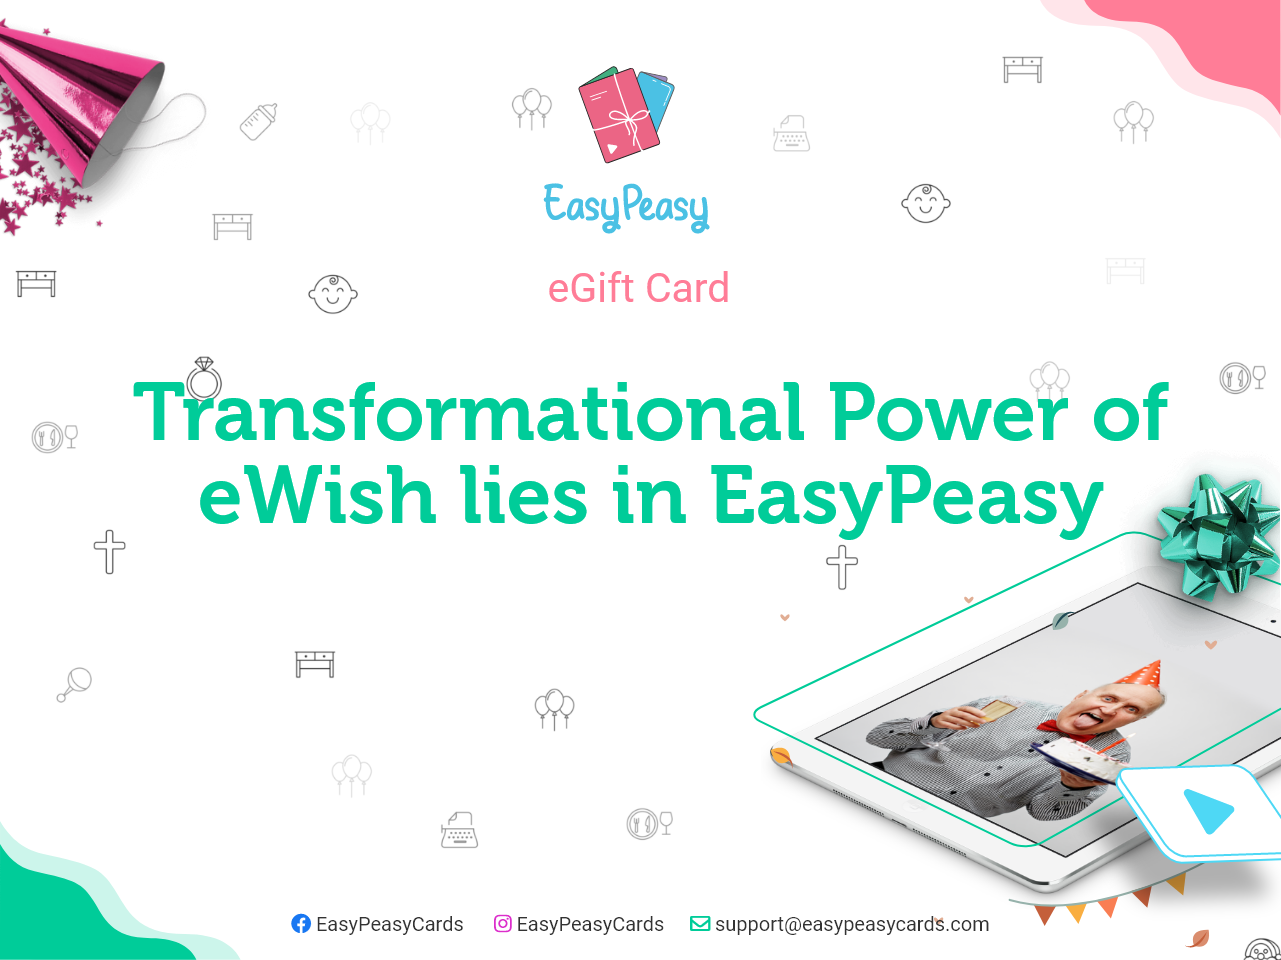 EasyPeasy Video eCard App is Here to Spread the Joy